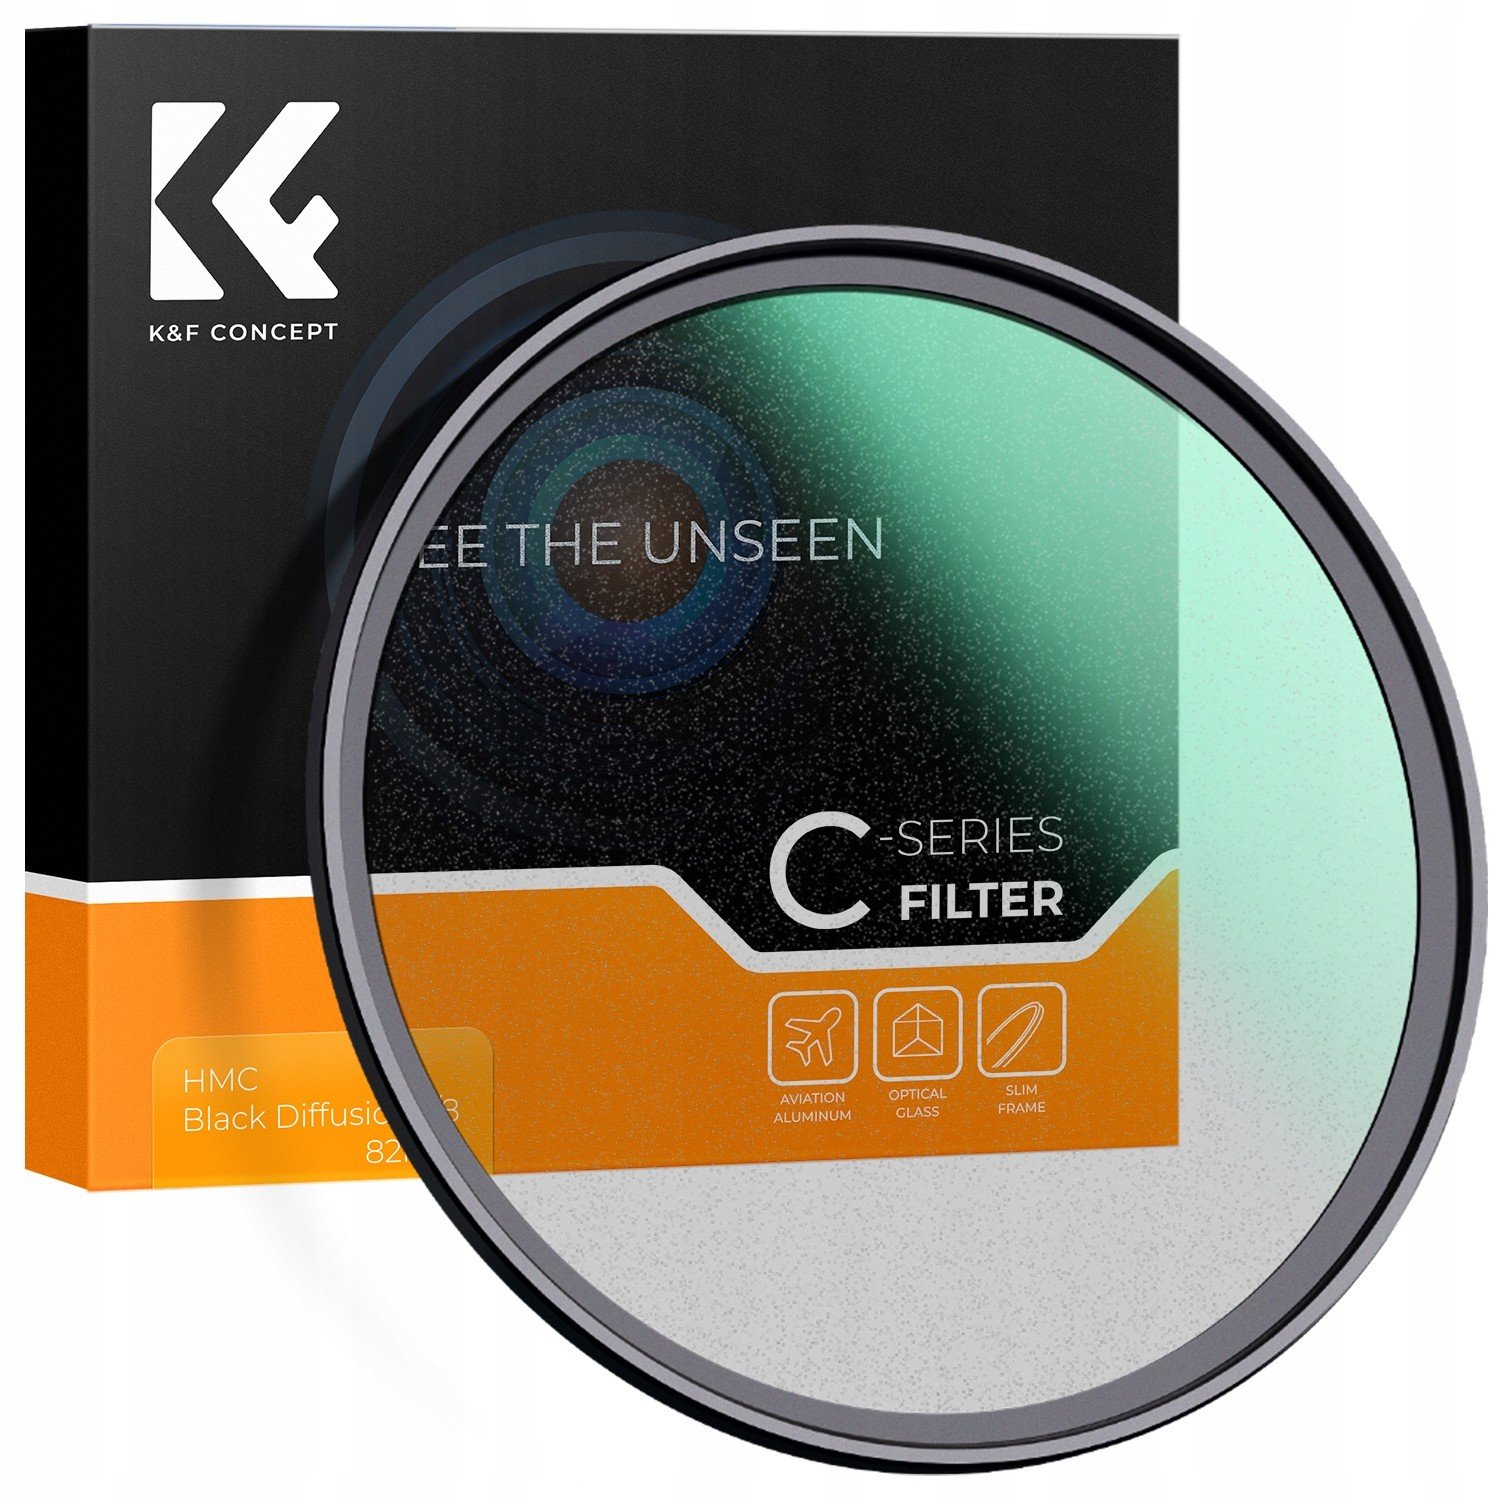 Difuzní filtr Black Mist 1/8 62mm Nano-C K&f